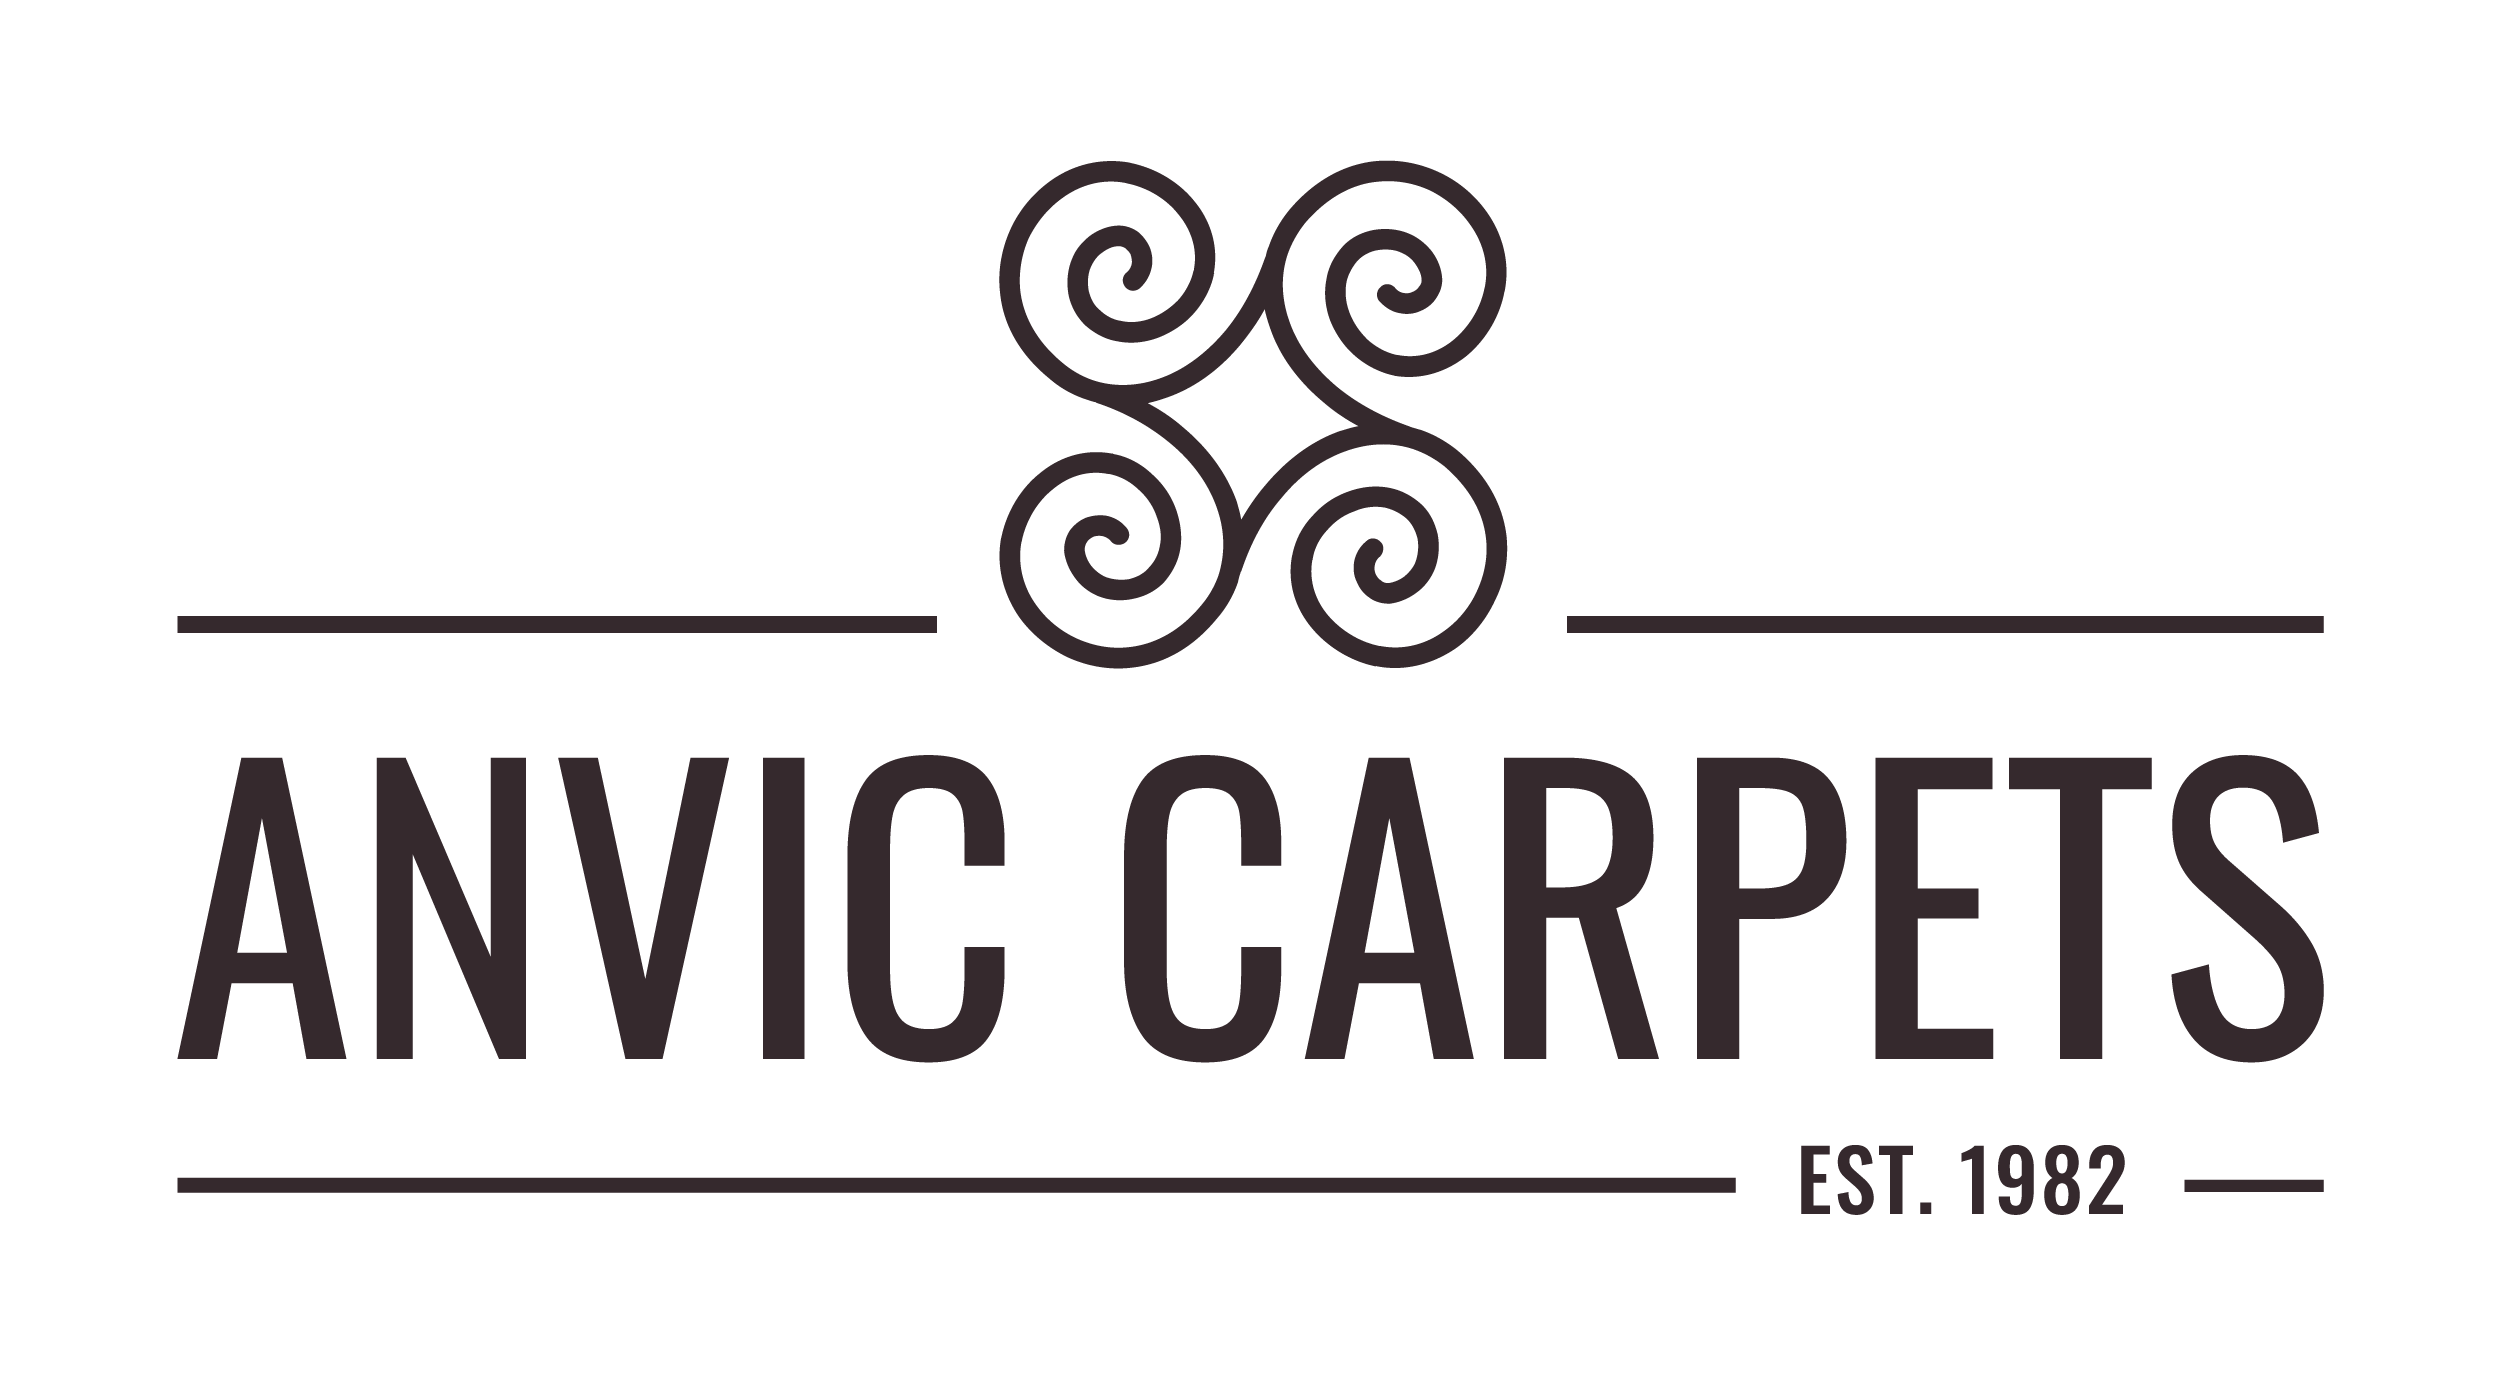 Anvic Carpet logo